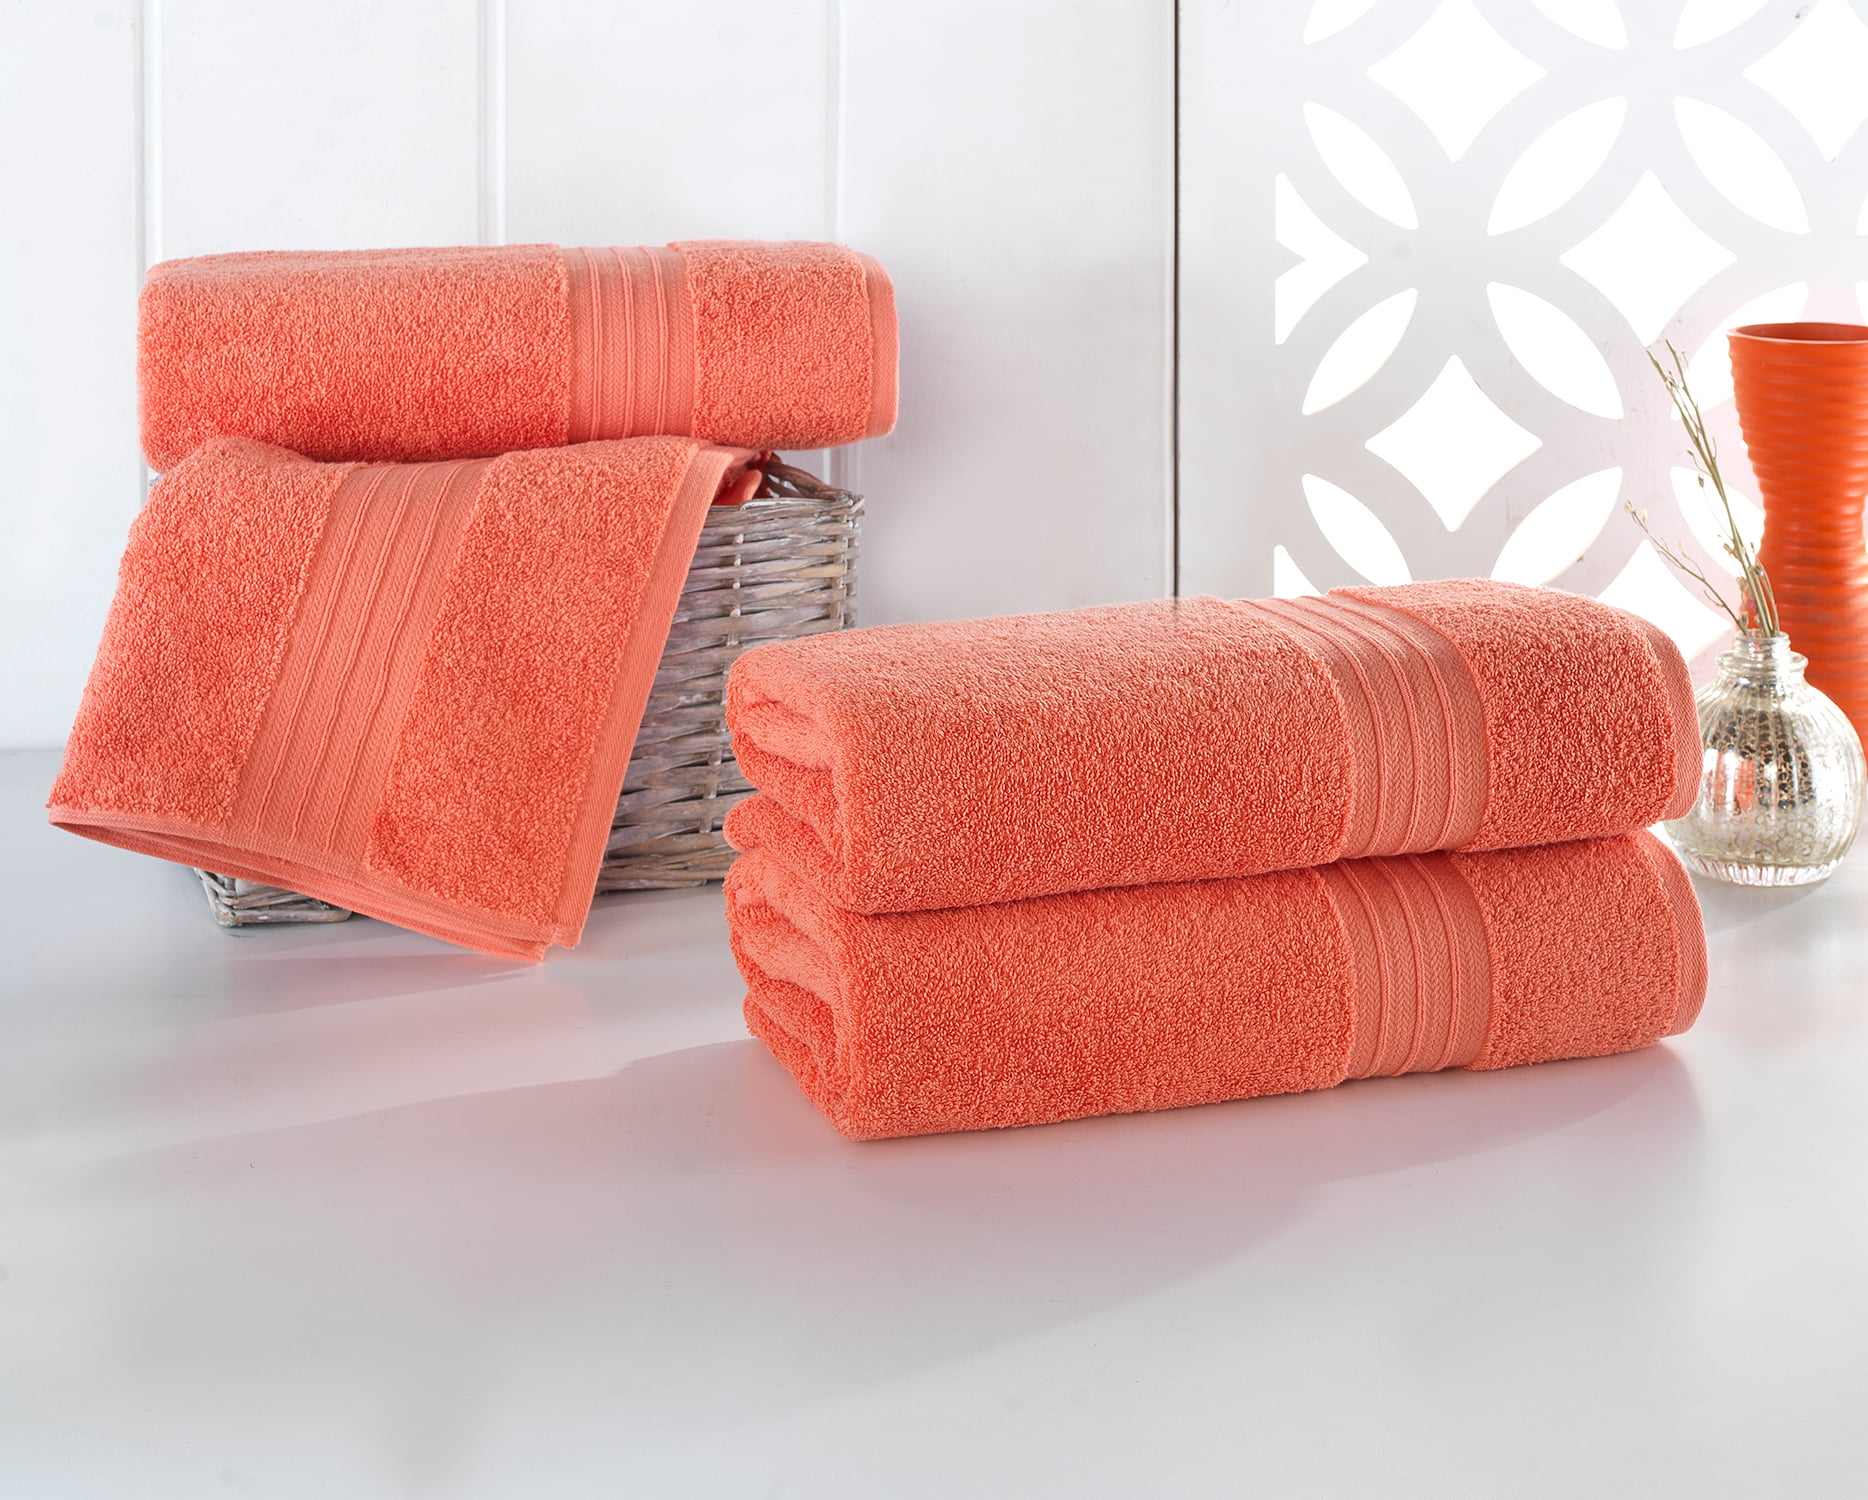 YiYan1 Orange 4 Piece XL Extra Large Bath Towels Set, 30 x 60 inches,  Premium Cotton Bathroom Towels, Plush Quality Hotel & SPA Towels for  Bathroom